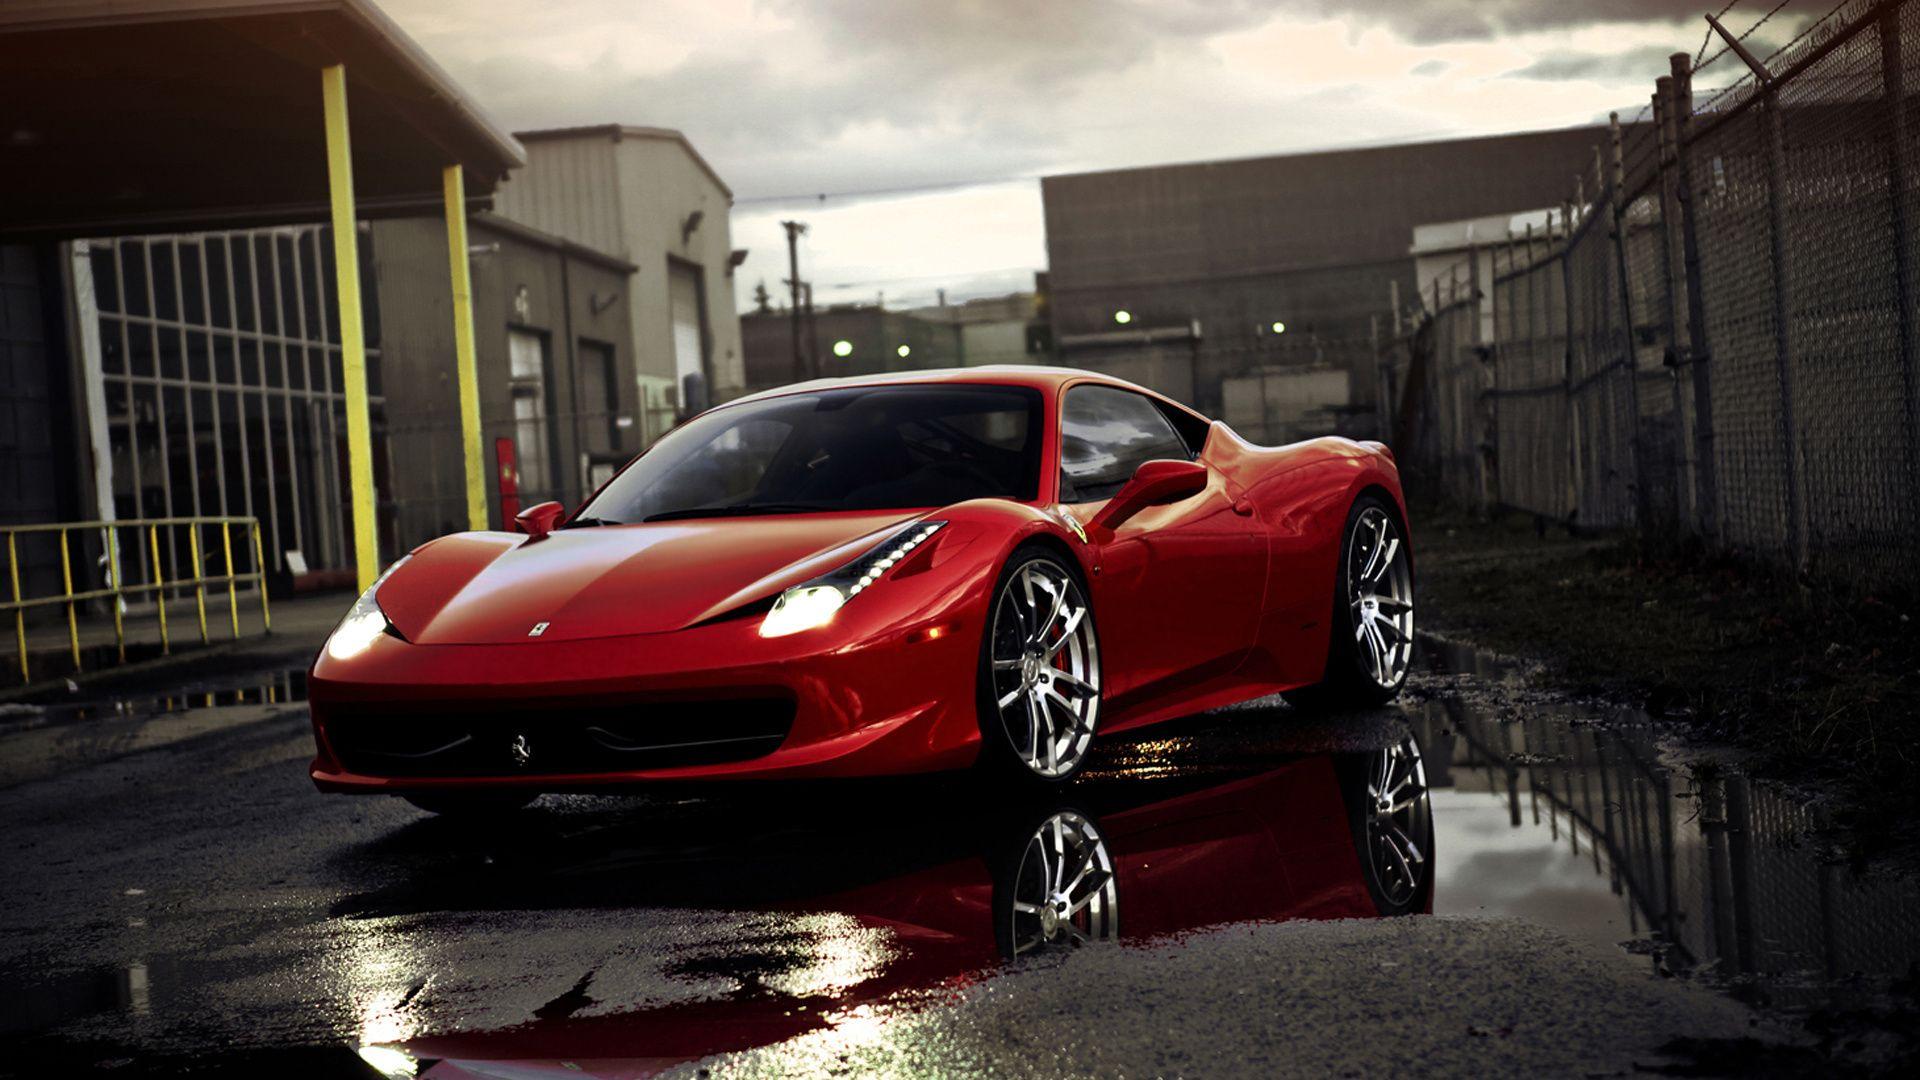 Full HD Ferrari Pics 1080p Desktop High Resolution Of iPhone Ittalia